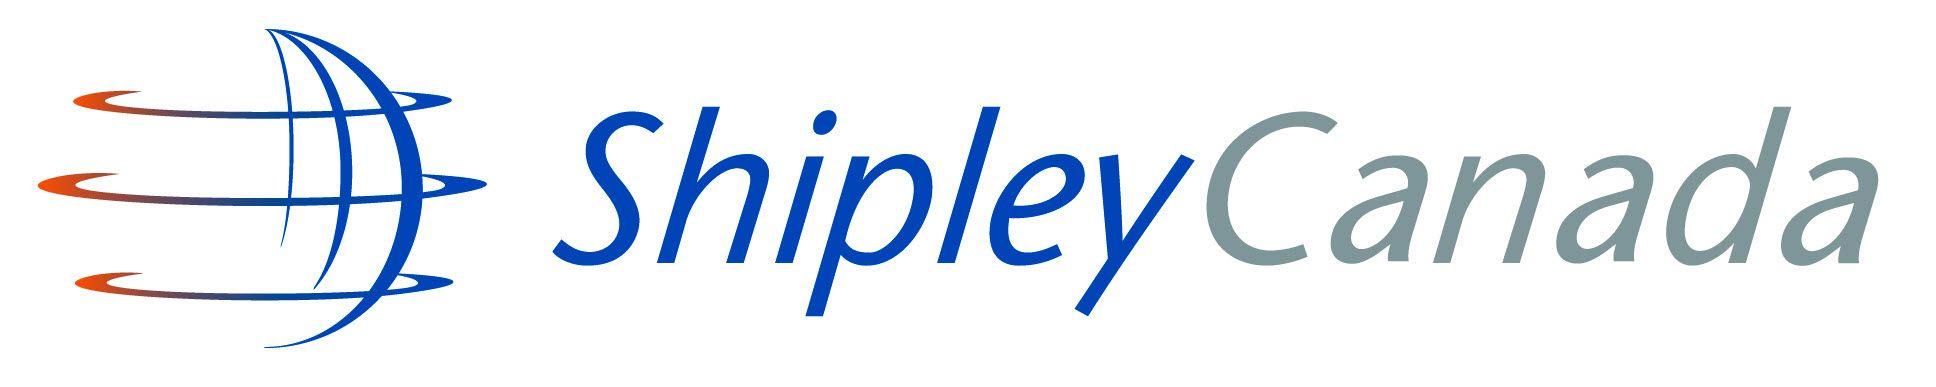 Shipley Logo - Shipley Canada